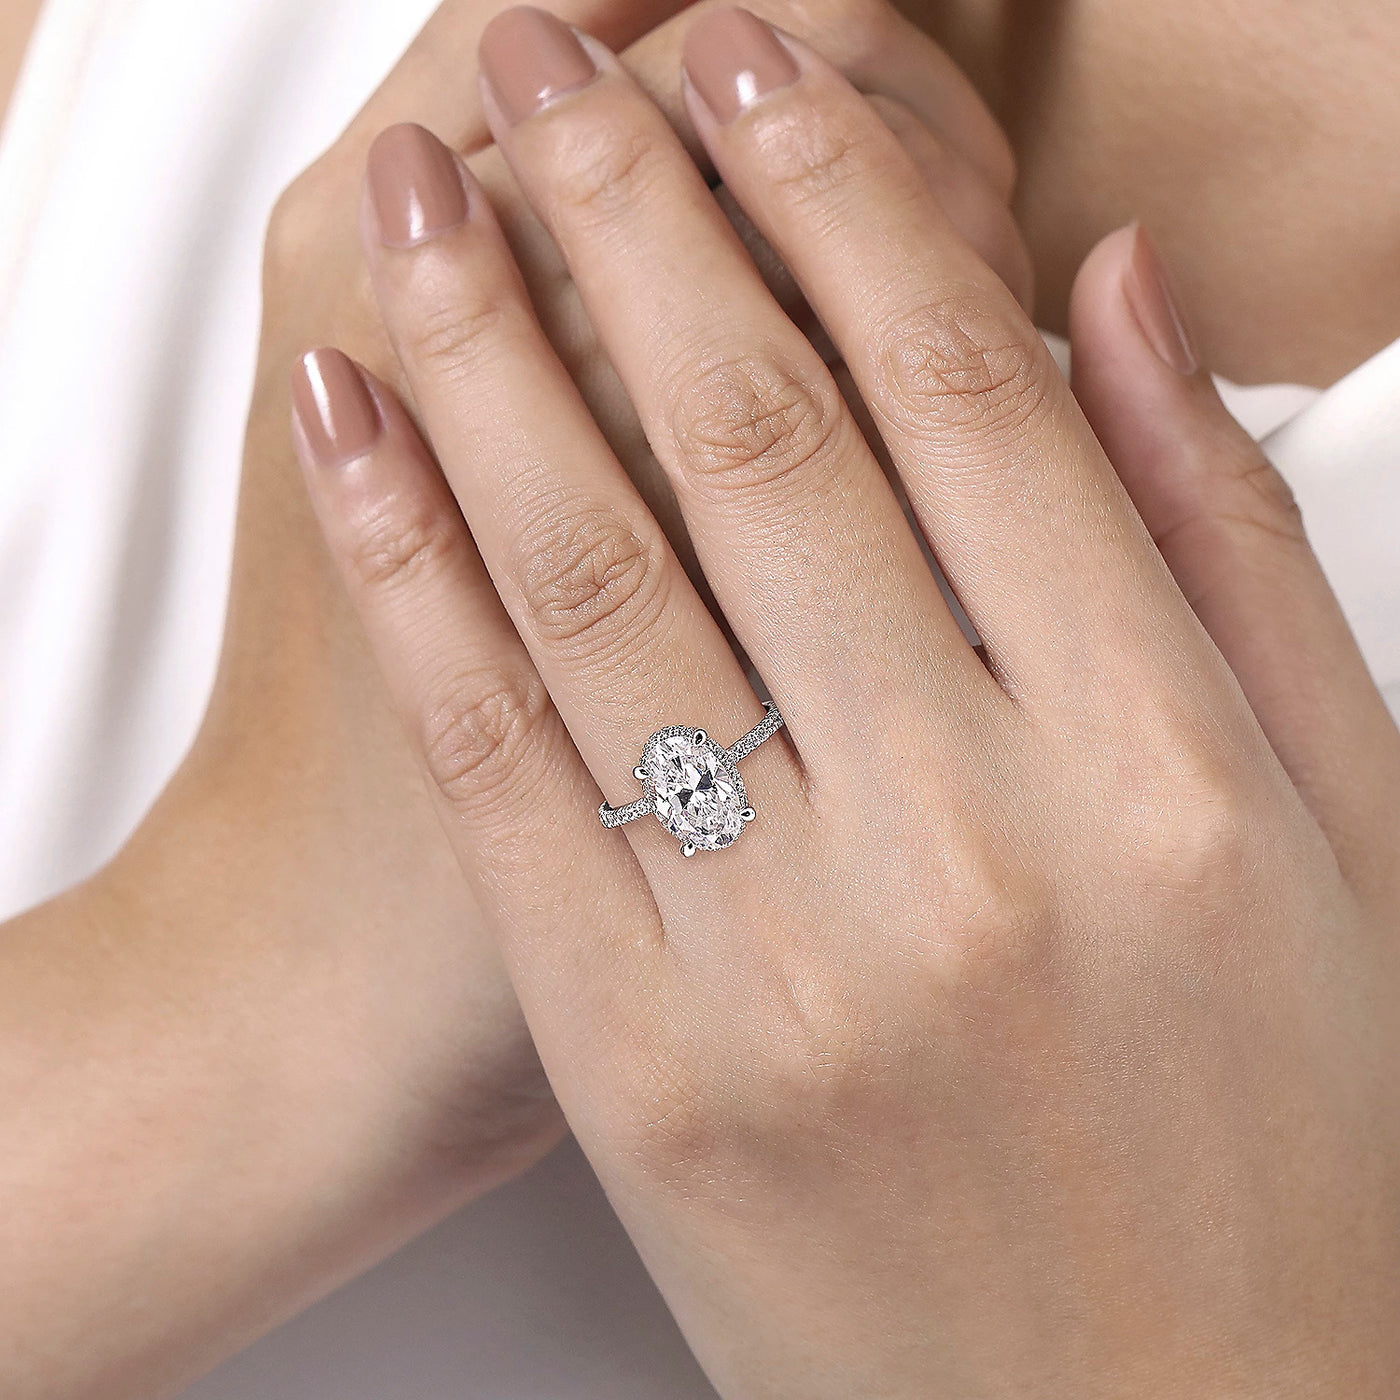 Gabriel & Co. 14k White Gold Oval Hidden Halo Diamond Semi-Mount Engagement Ring – ER14719O12W44JJ.CSCZ